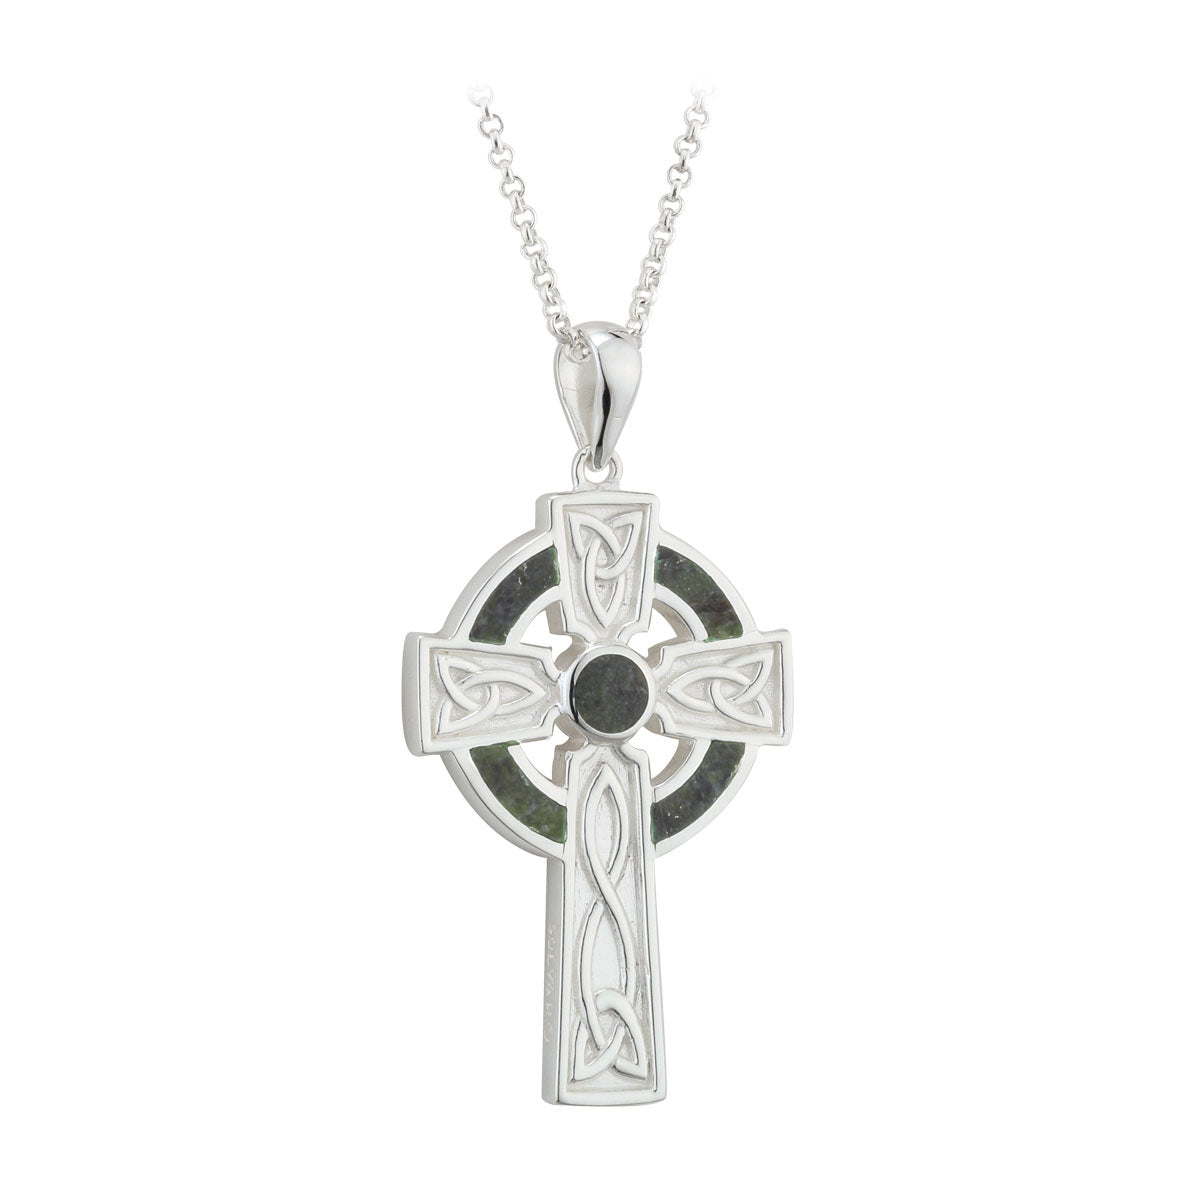 sterling silver large connemara marble cross pendant s46024 from Solvar